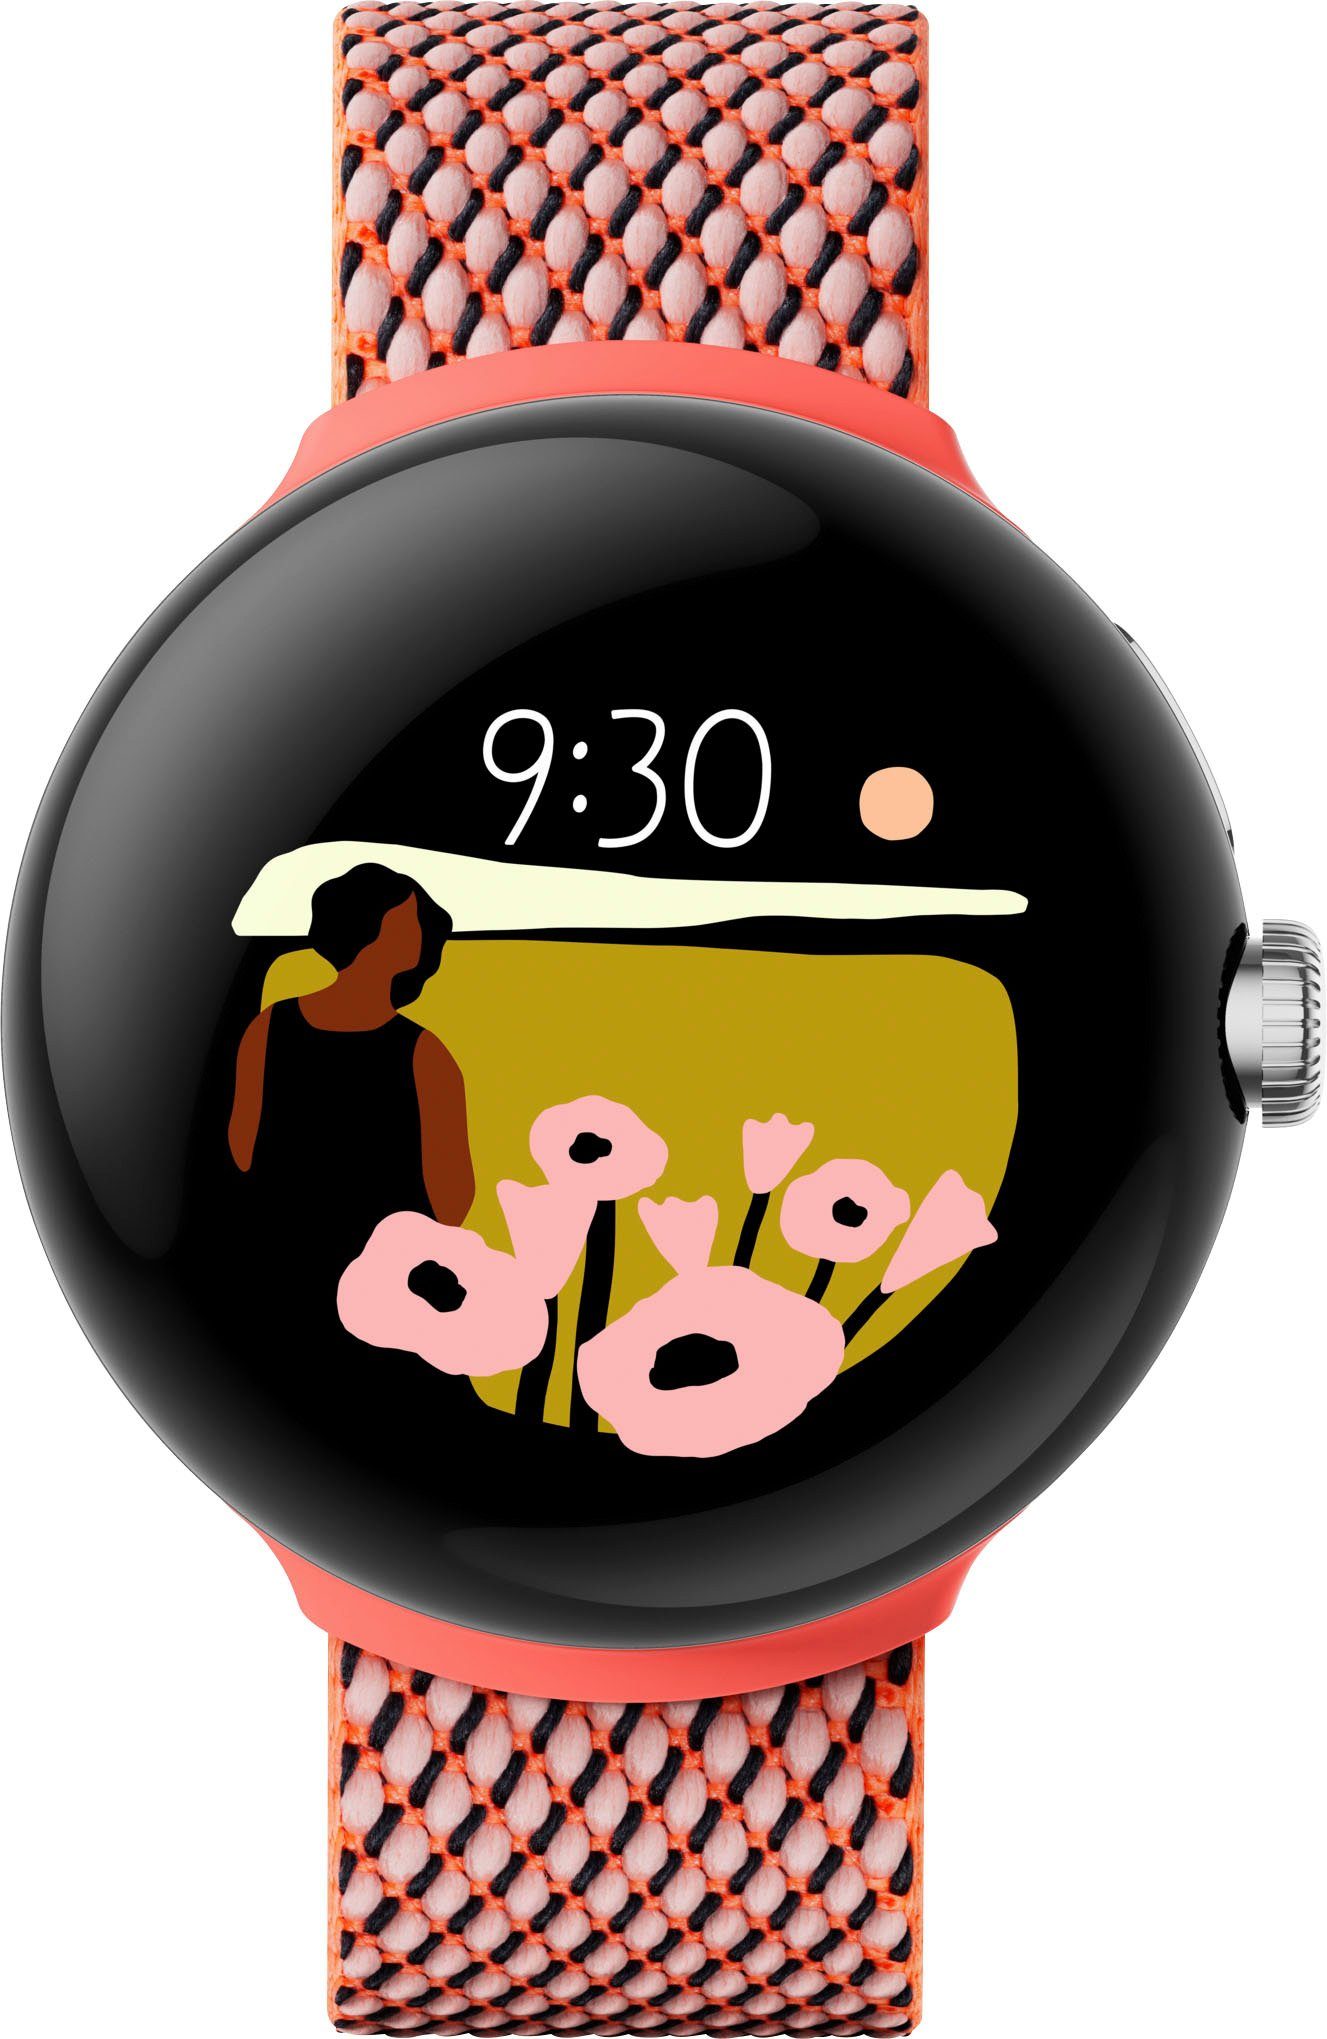 Smartwatch-Armband Woven Watch Google Band Coral Pixel